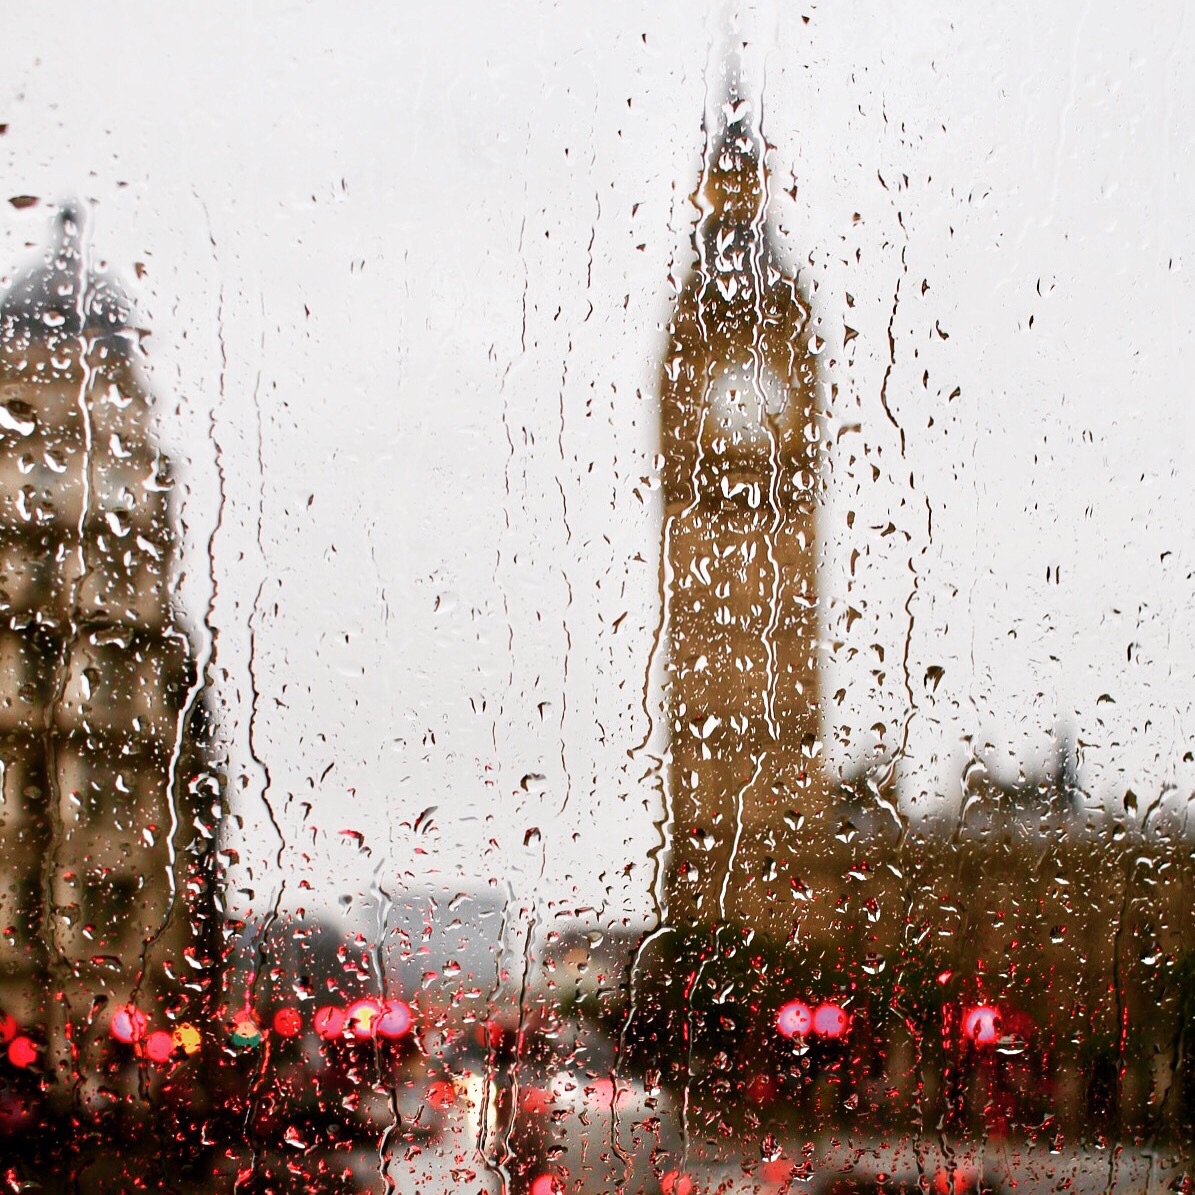 London Rain Wallpapers - Top Free London Rain Backgrounds 